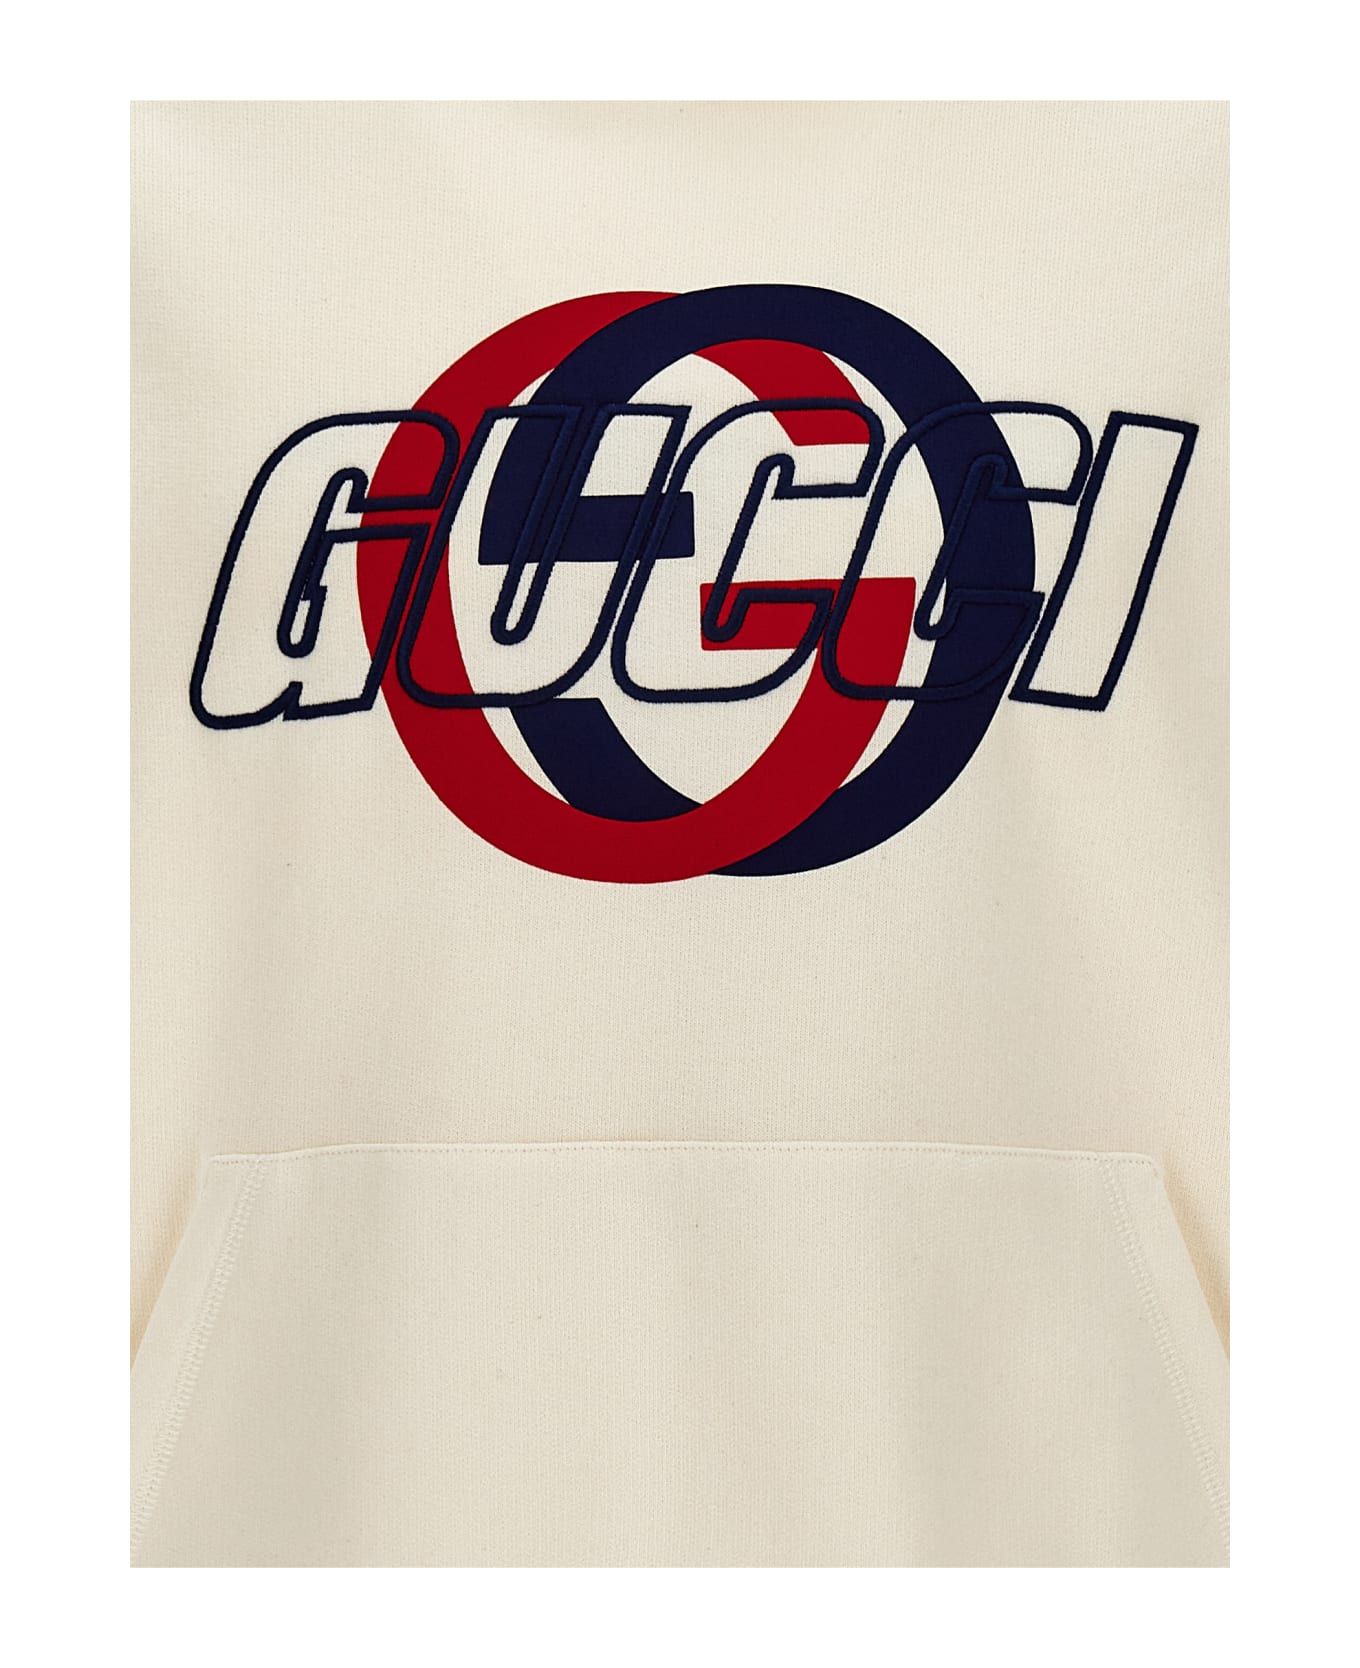 Gucci Logo Hoodie - White